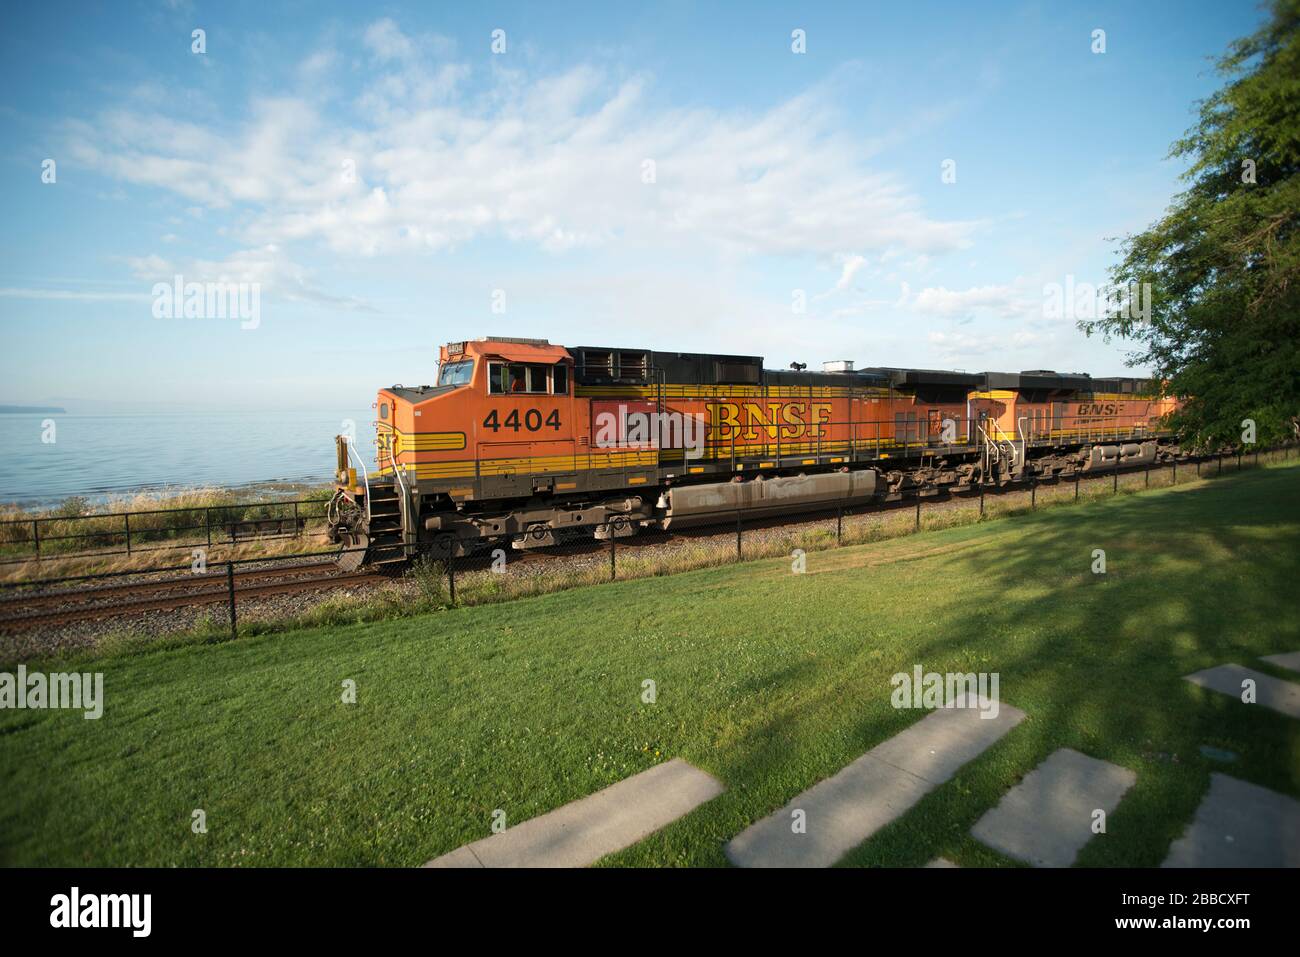 A BNSF train in White Rock, British Columbia, Canada Stock Photo